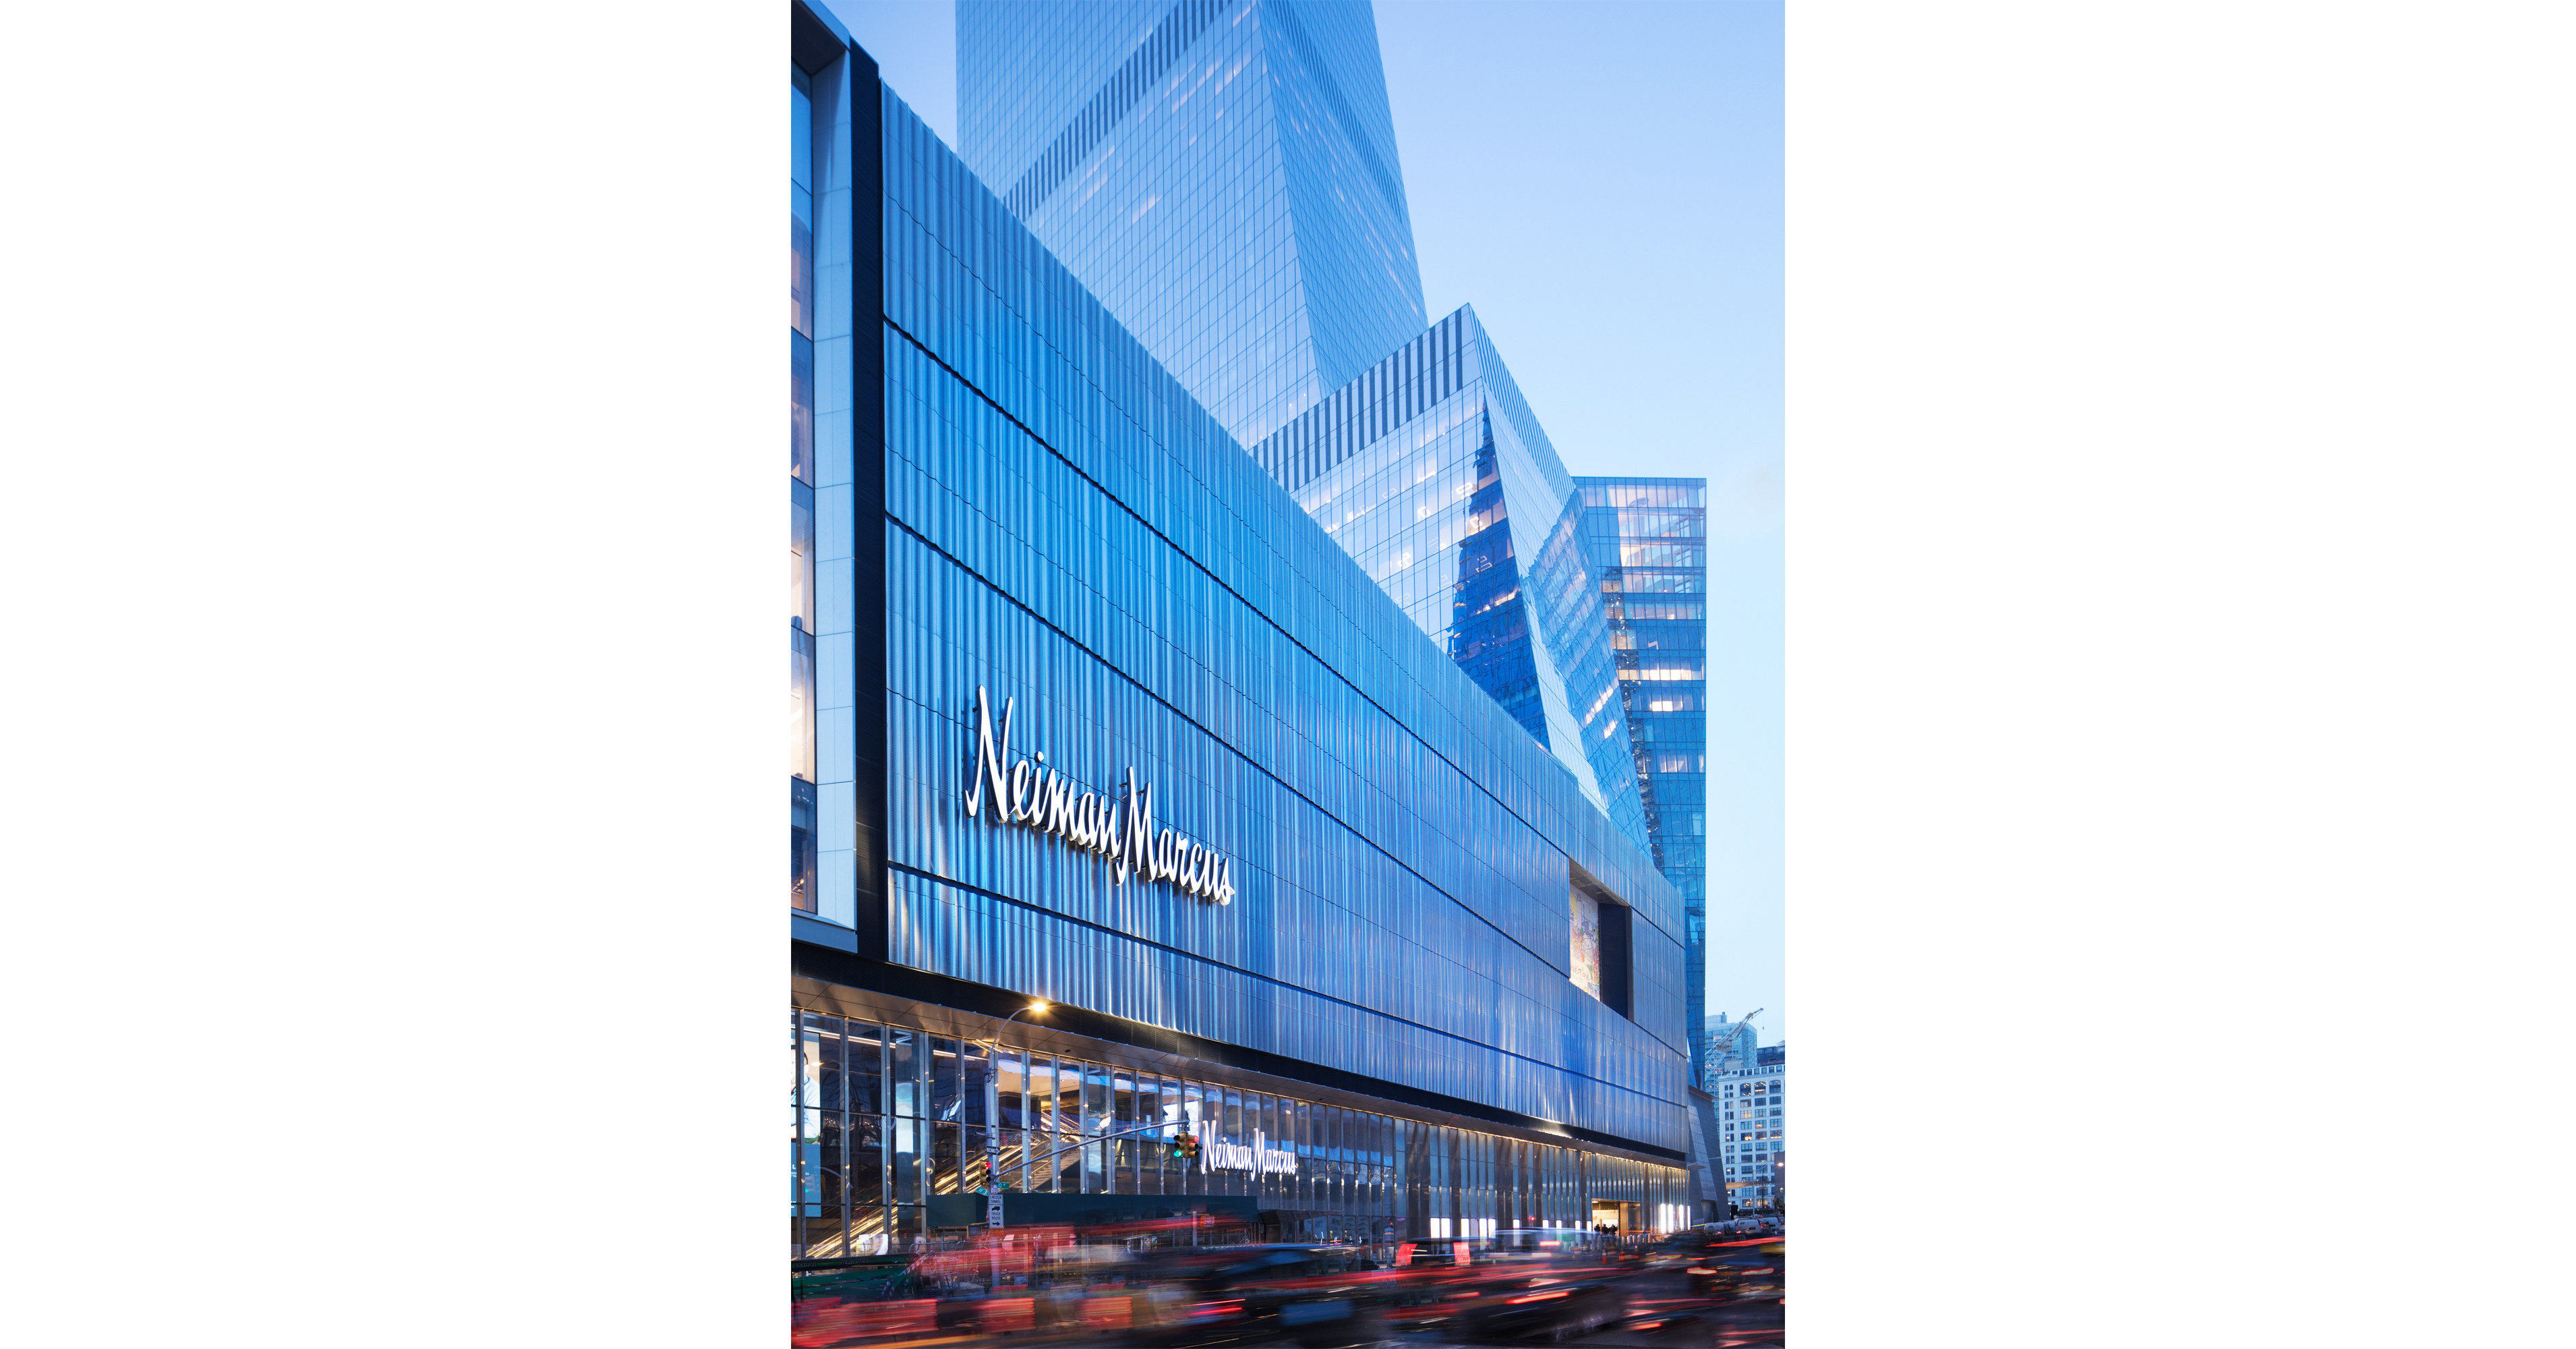 Louis Vuitton, Hudson Yards Neiman Marcus – PID Floors